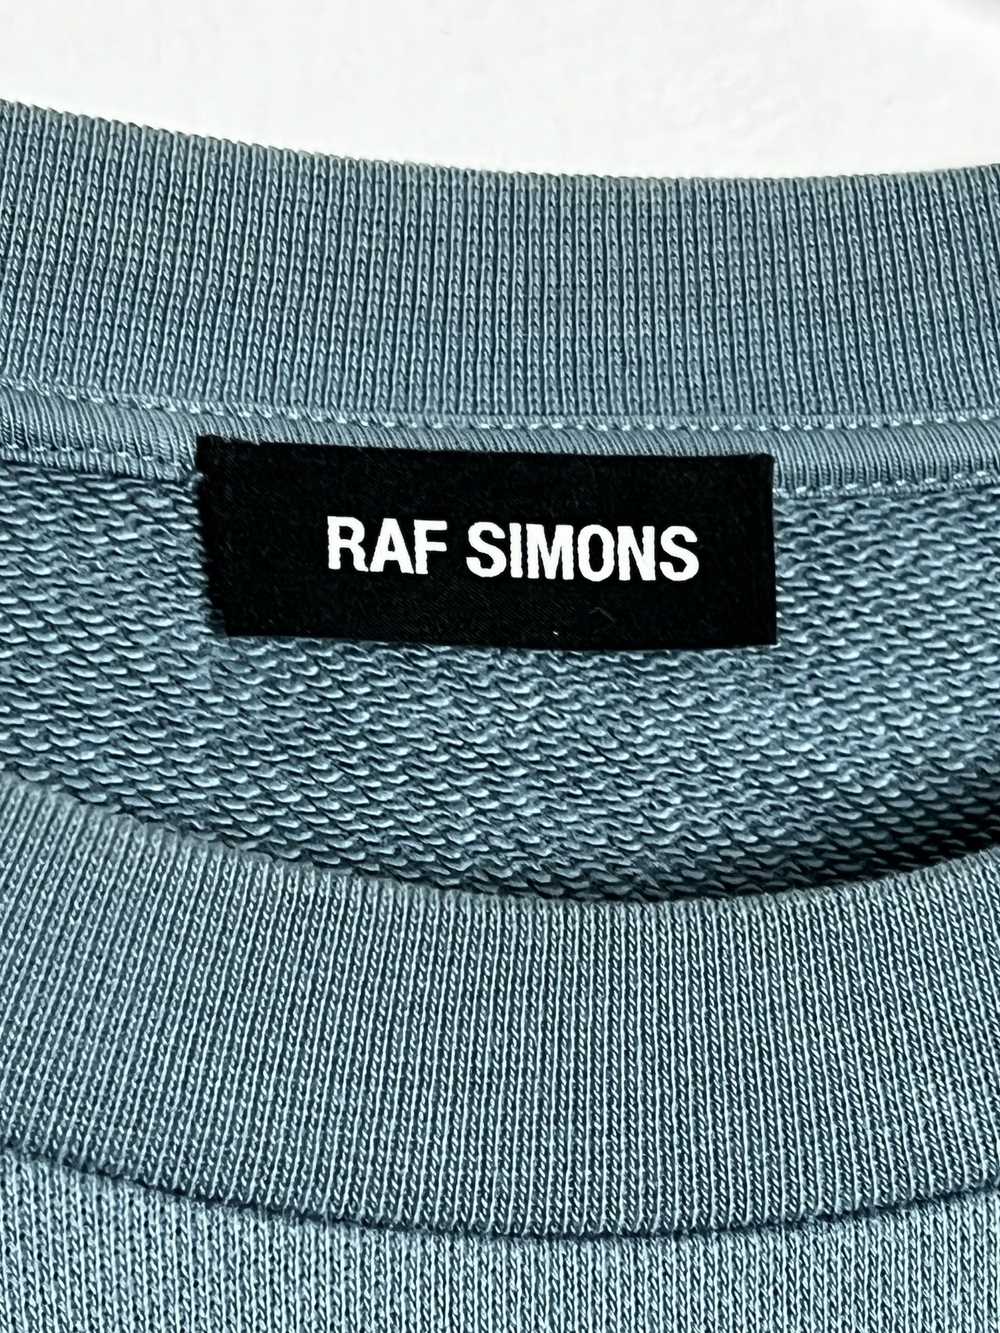 Raf Simons Ace of Clubs Printed Sweatshirt - image 5